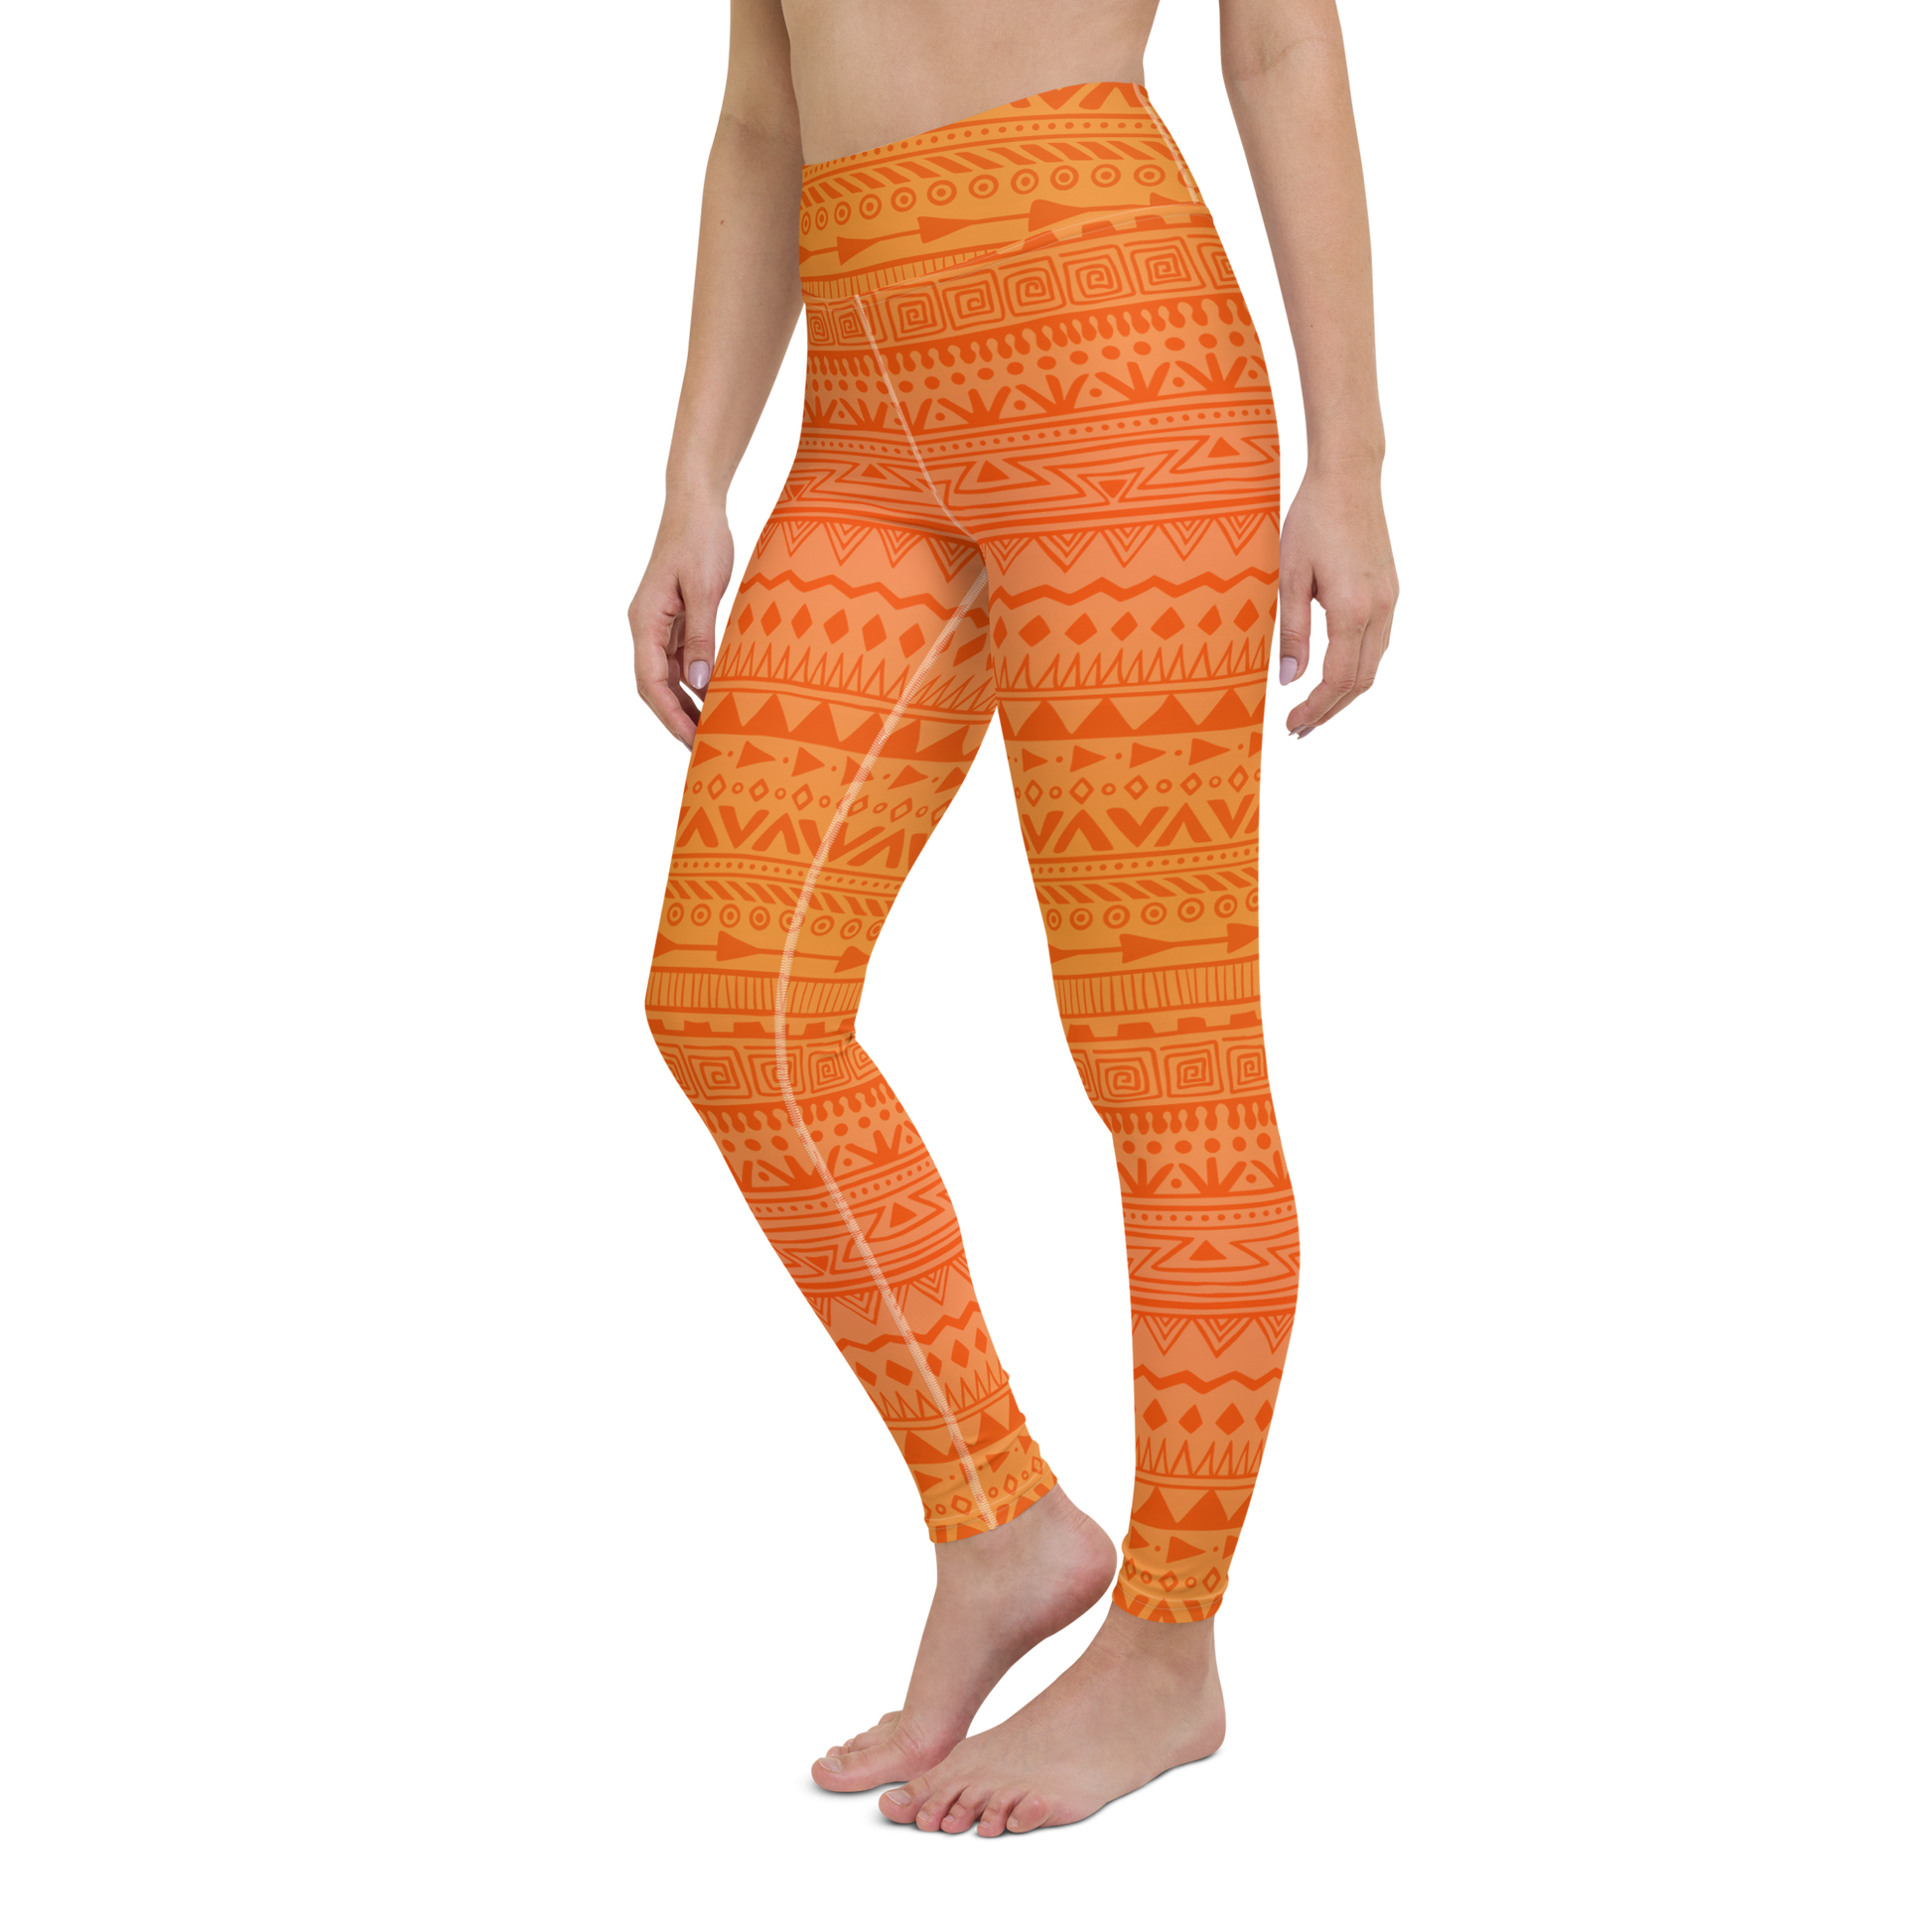 Dutch Holland / Netherlands Orange Yoga Leggings